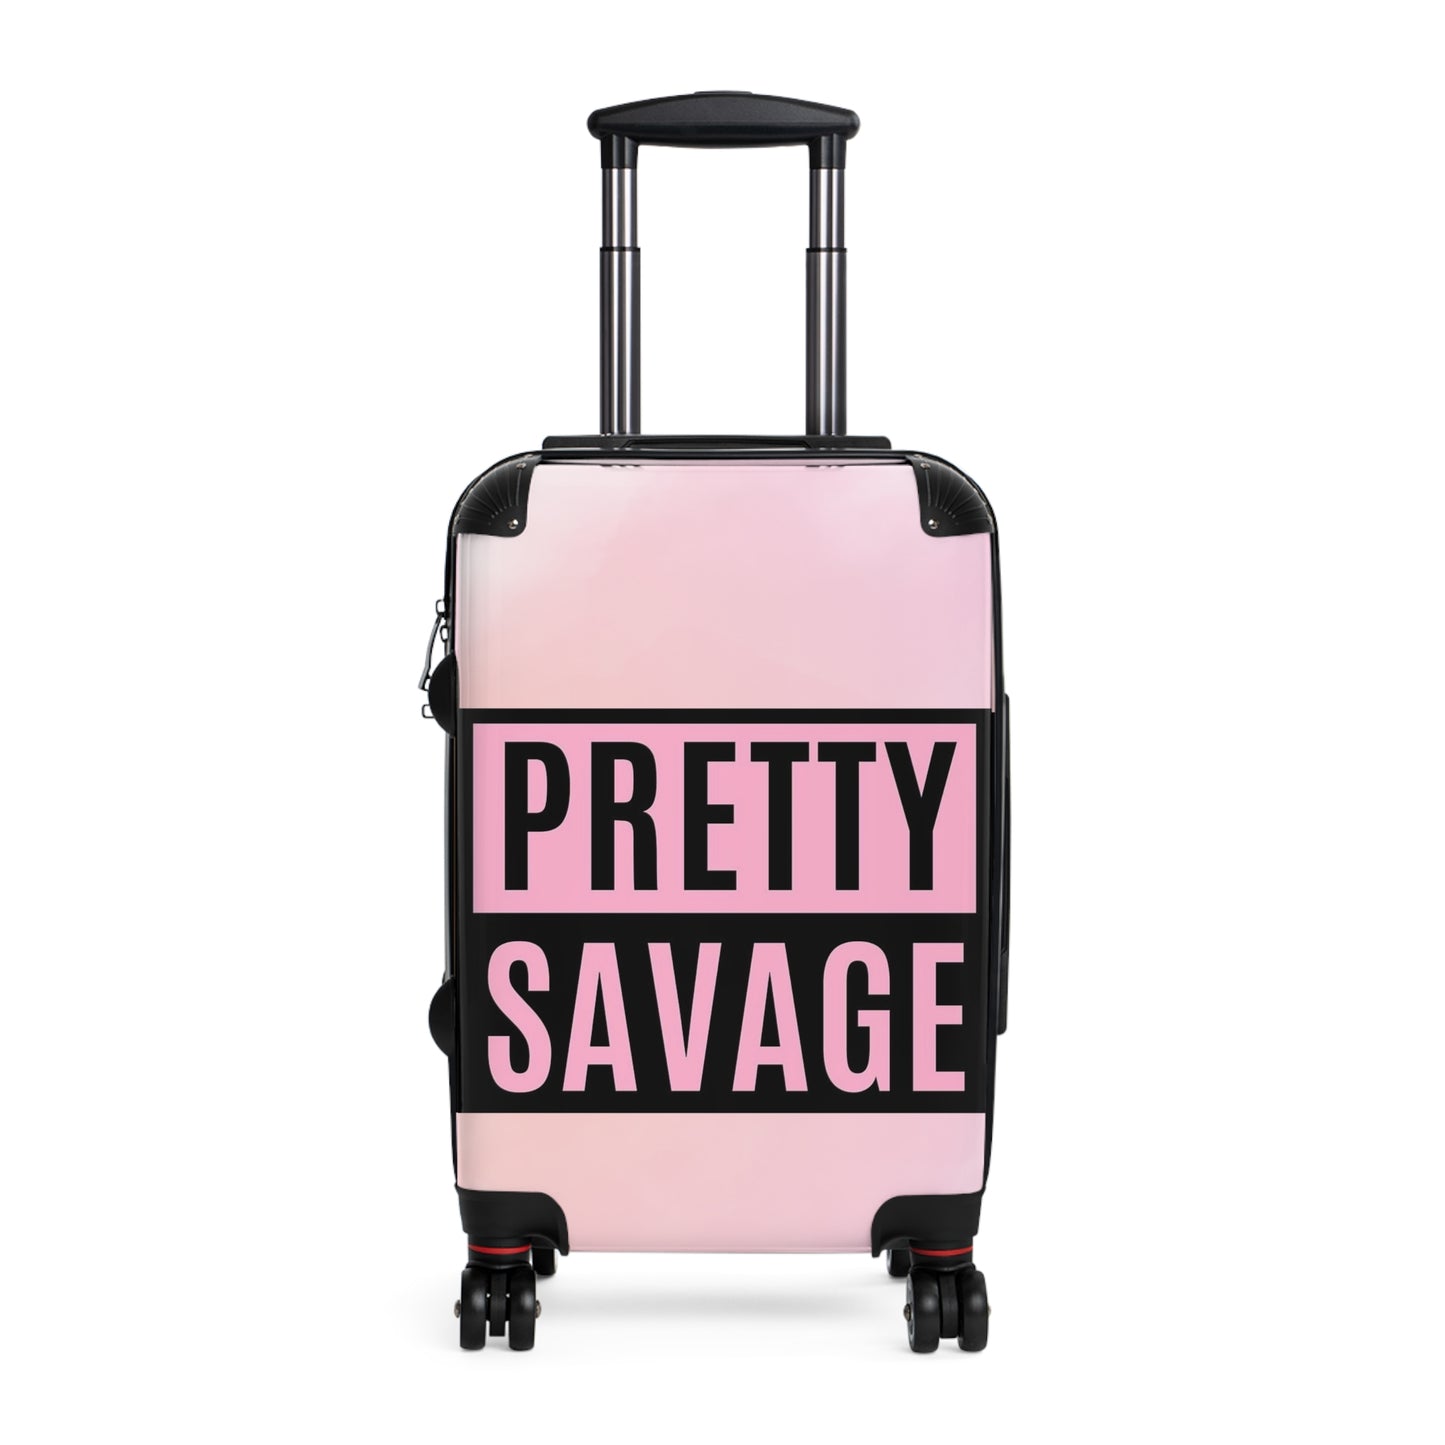 PRETTY SAVAGE Suitcase